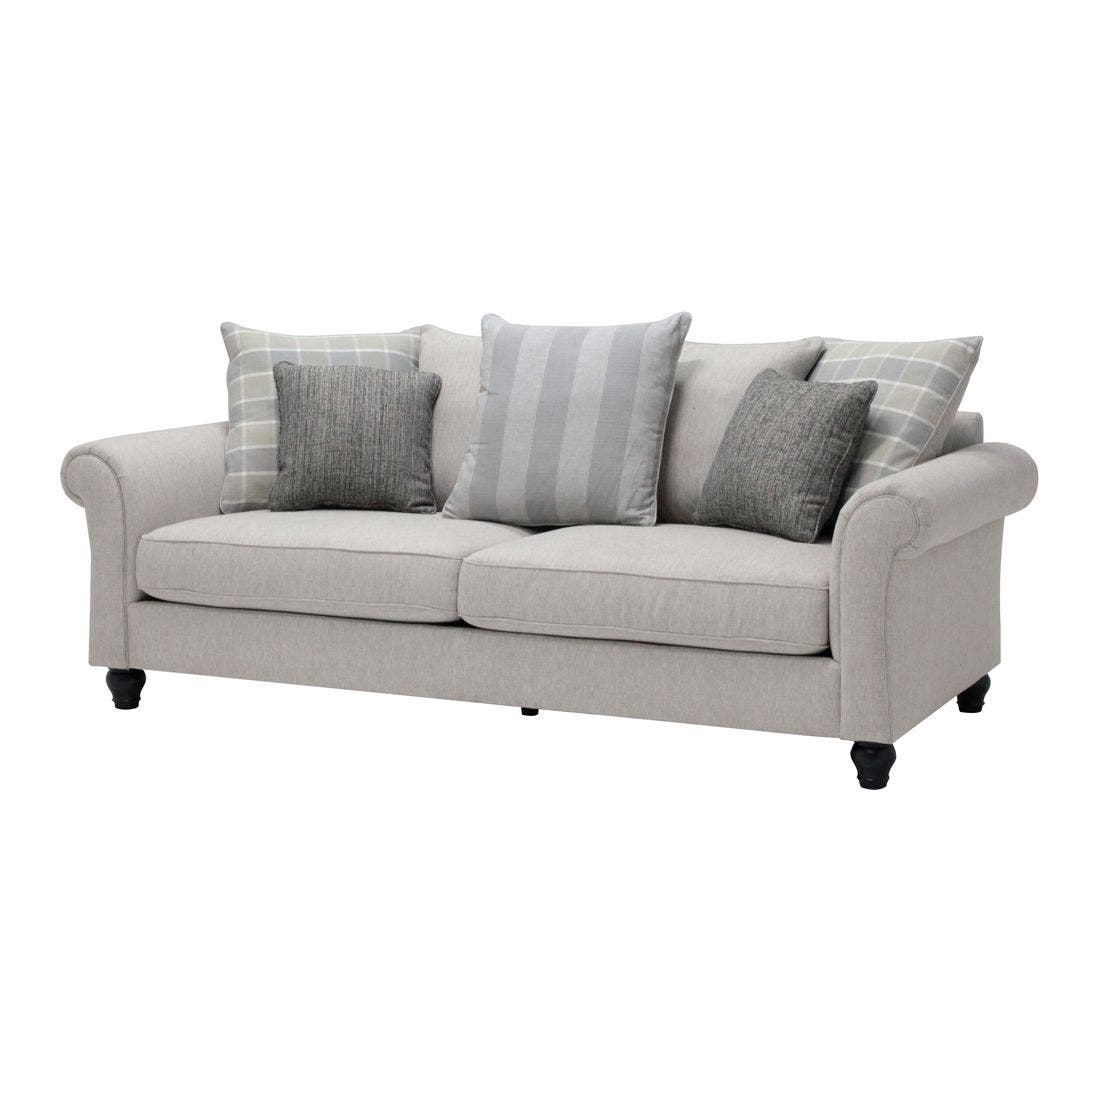 19191988-horally-furniture-sofa-recliner-sofa-01